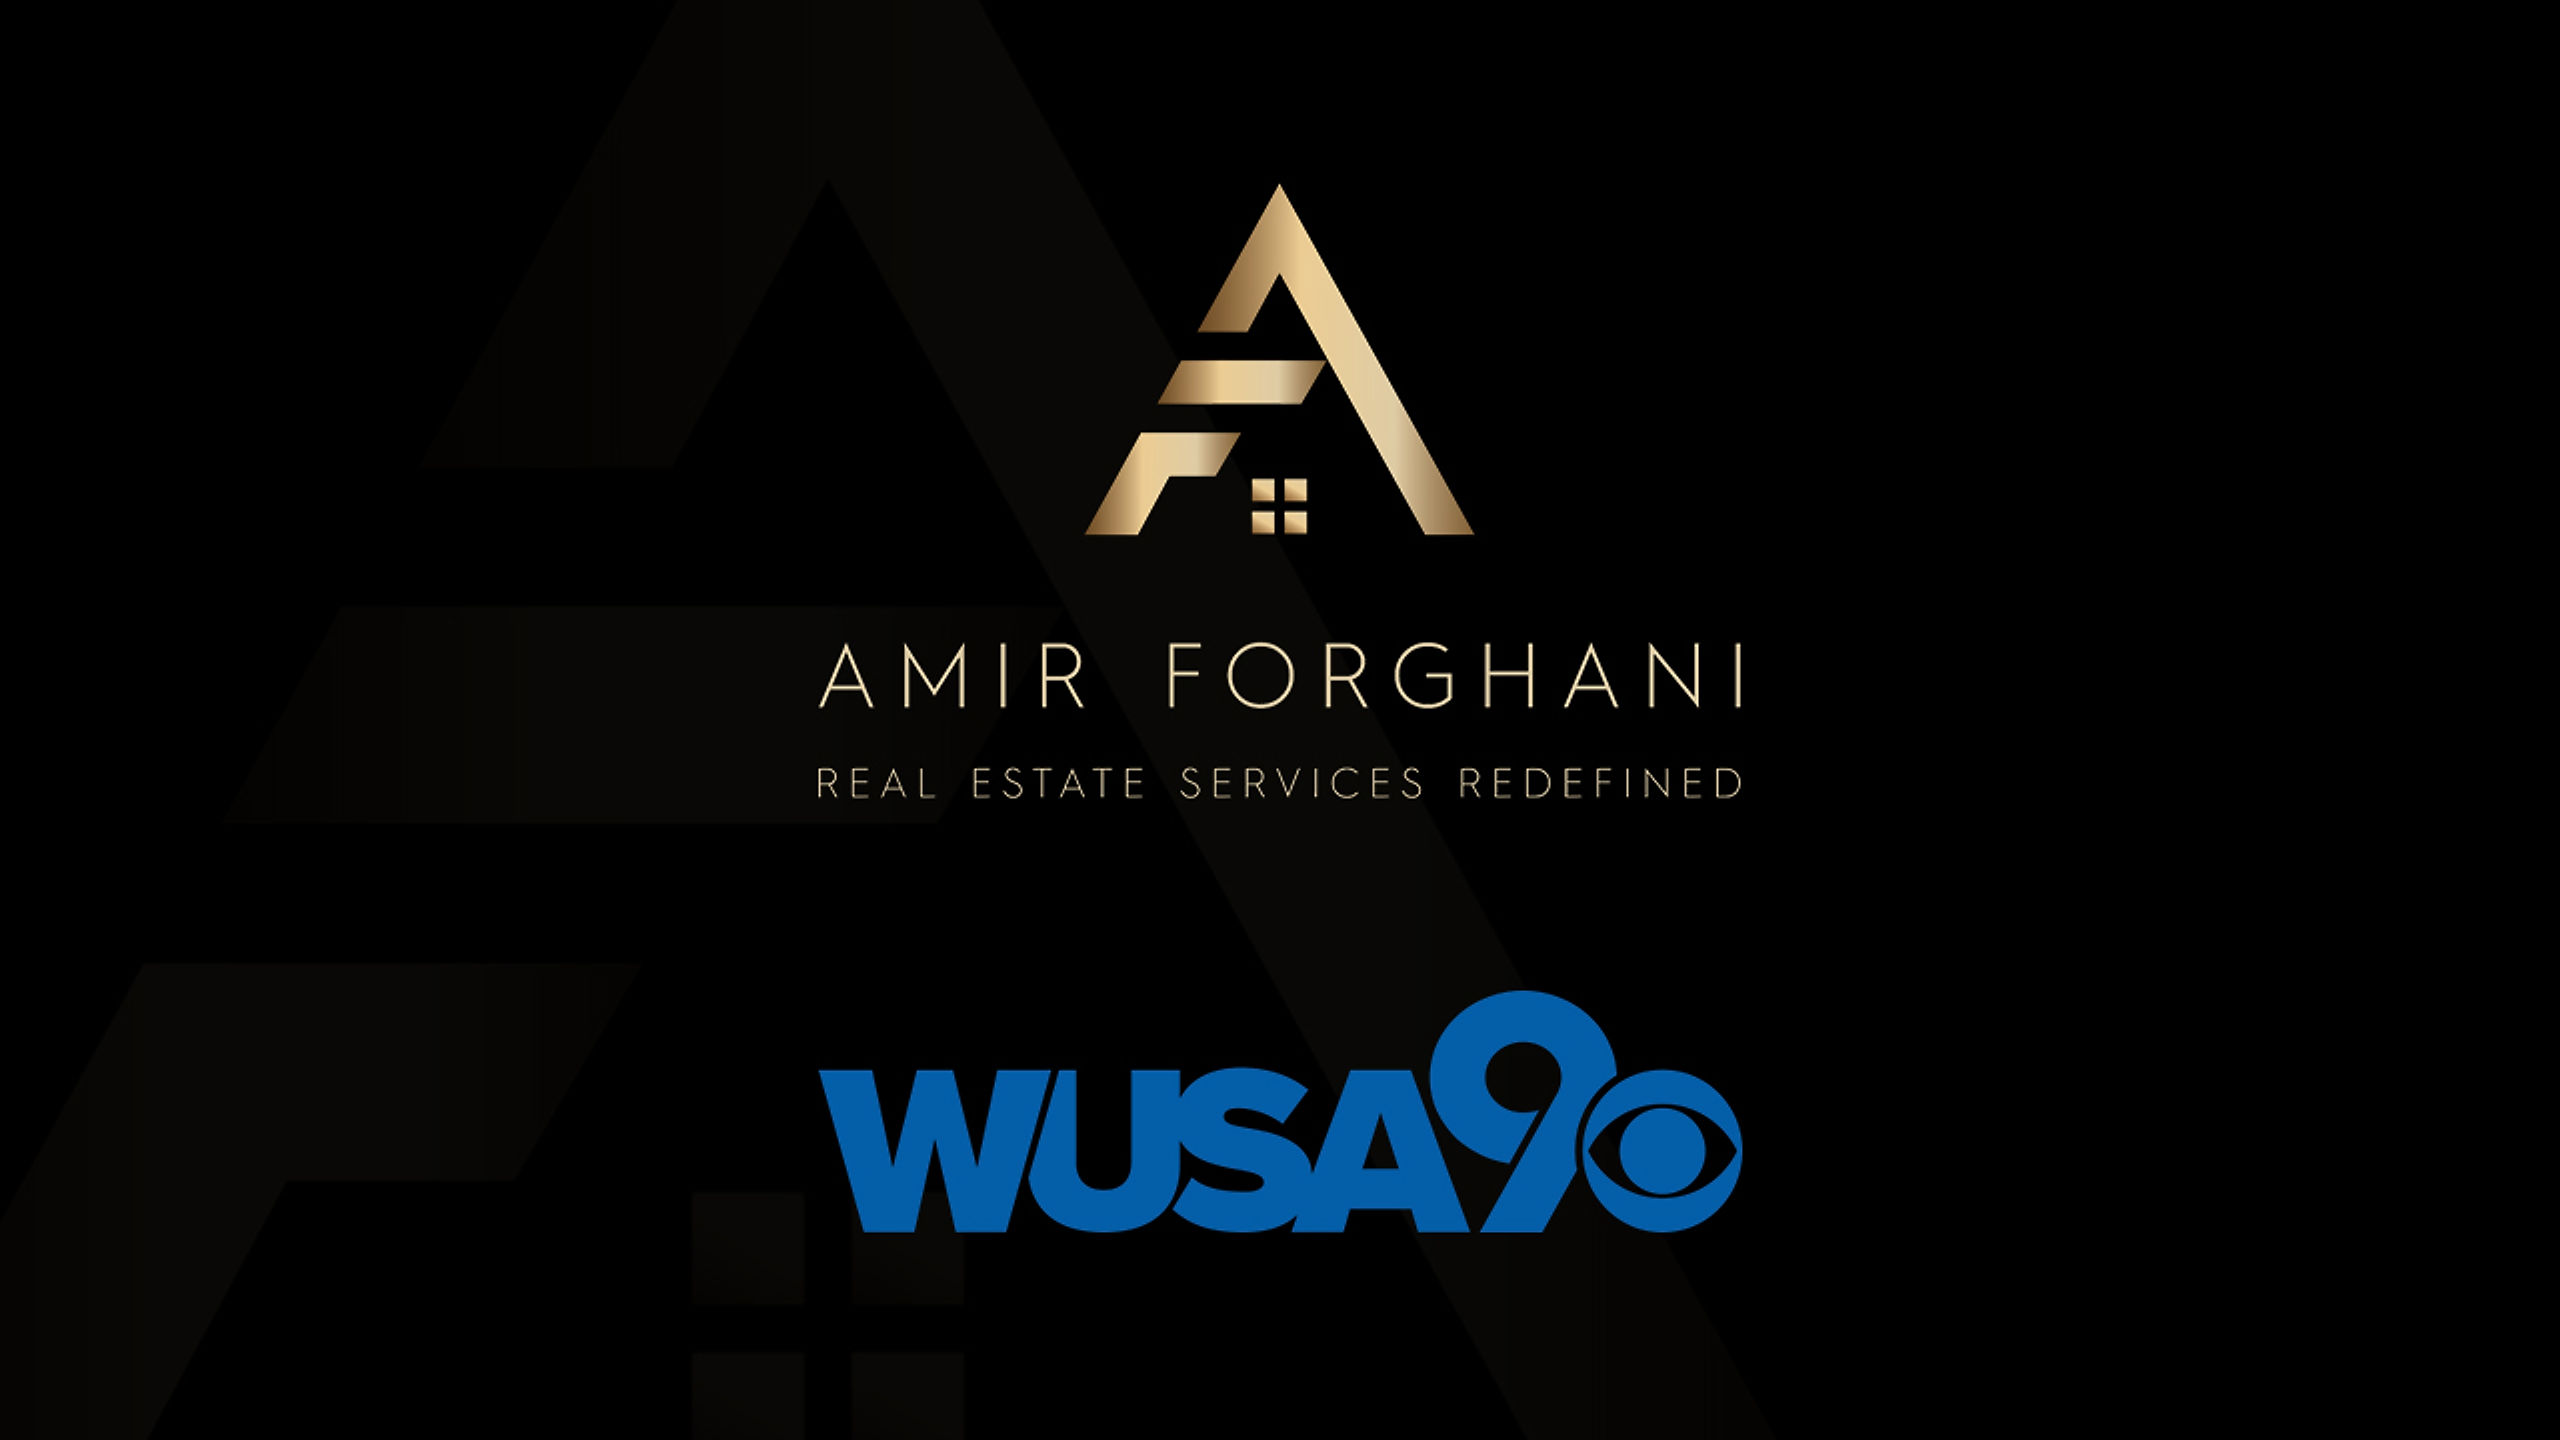 WUSA9 with Amir Forghani